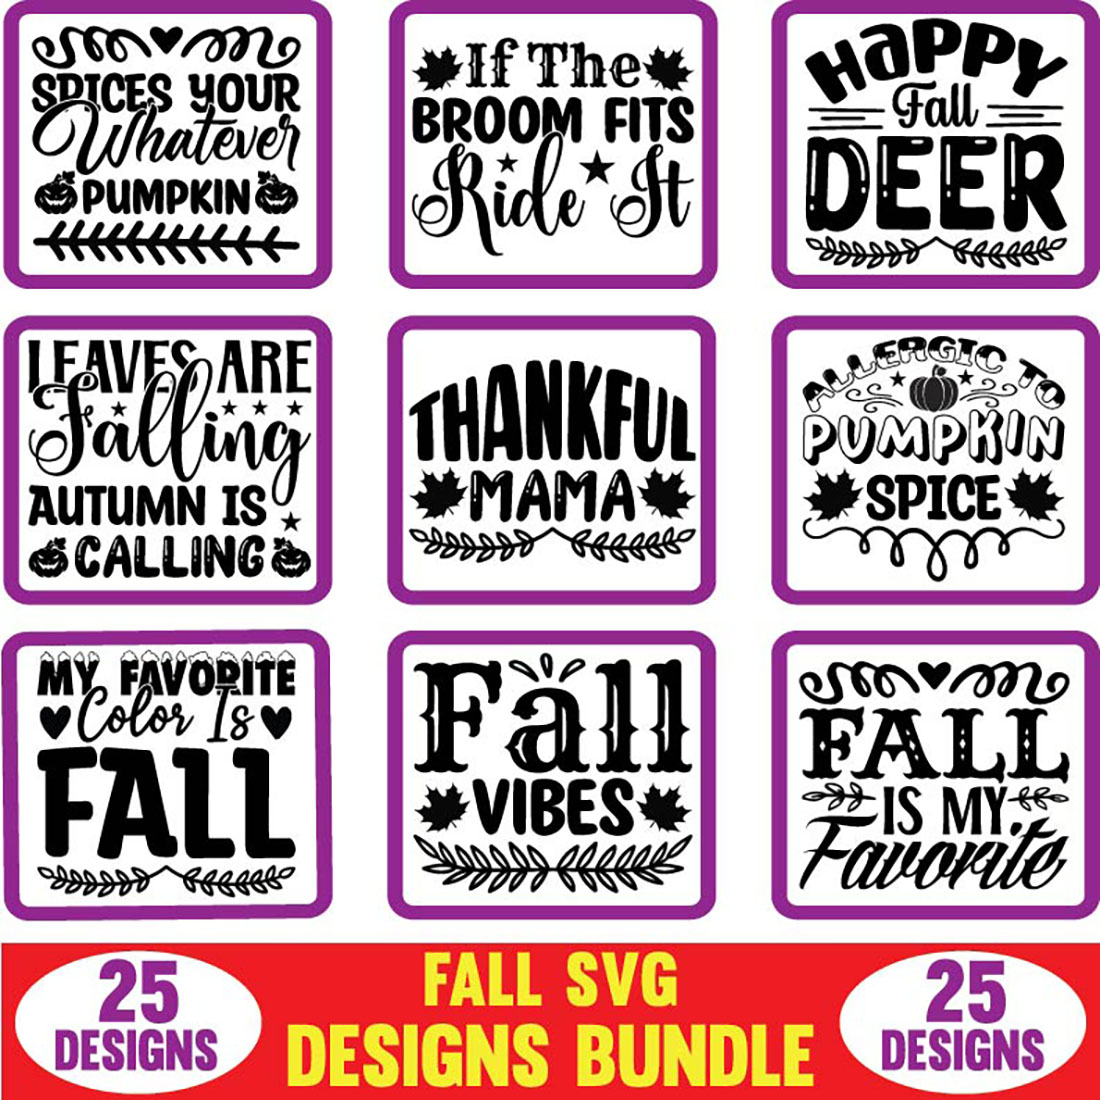 Fall SVG Designs Bundle cover